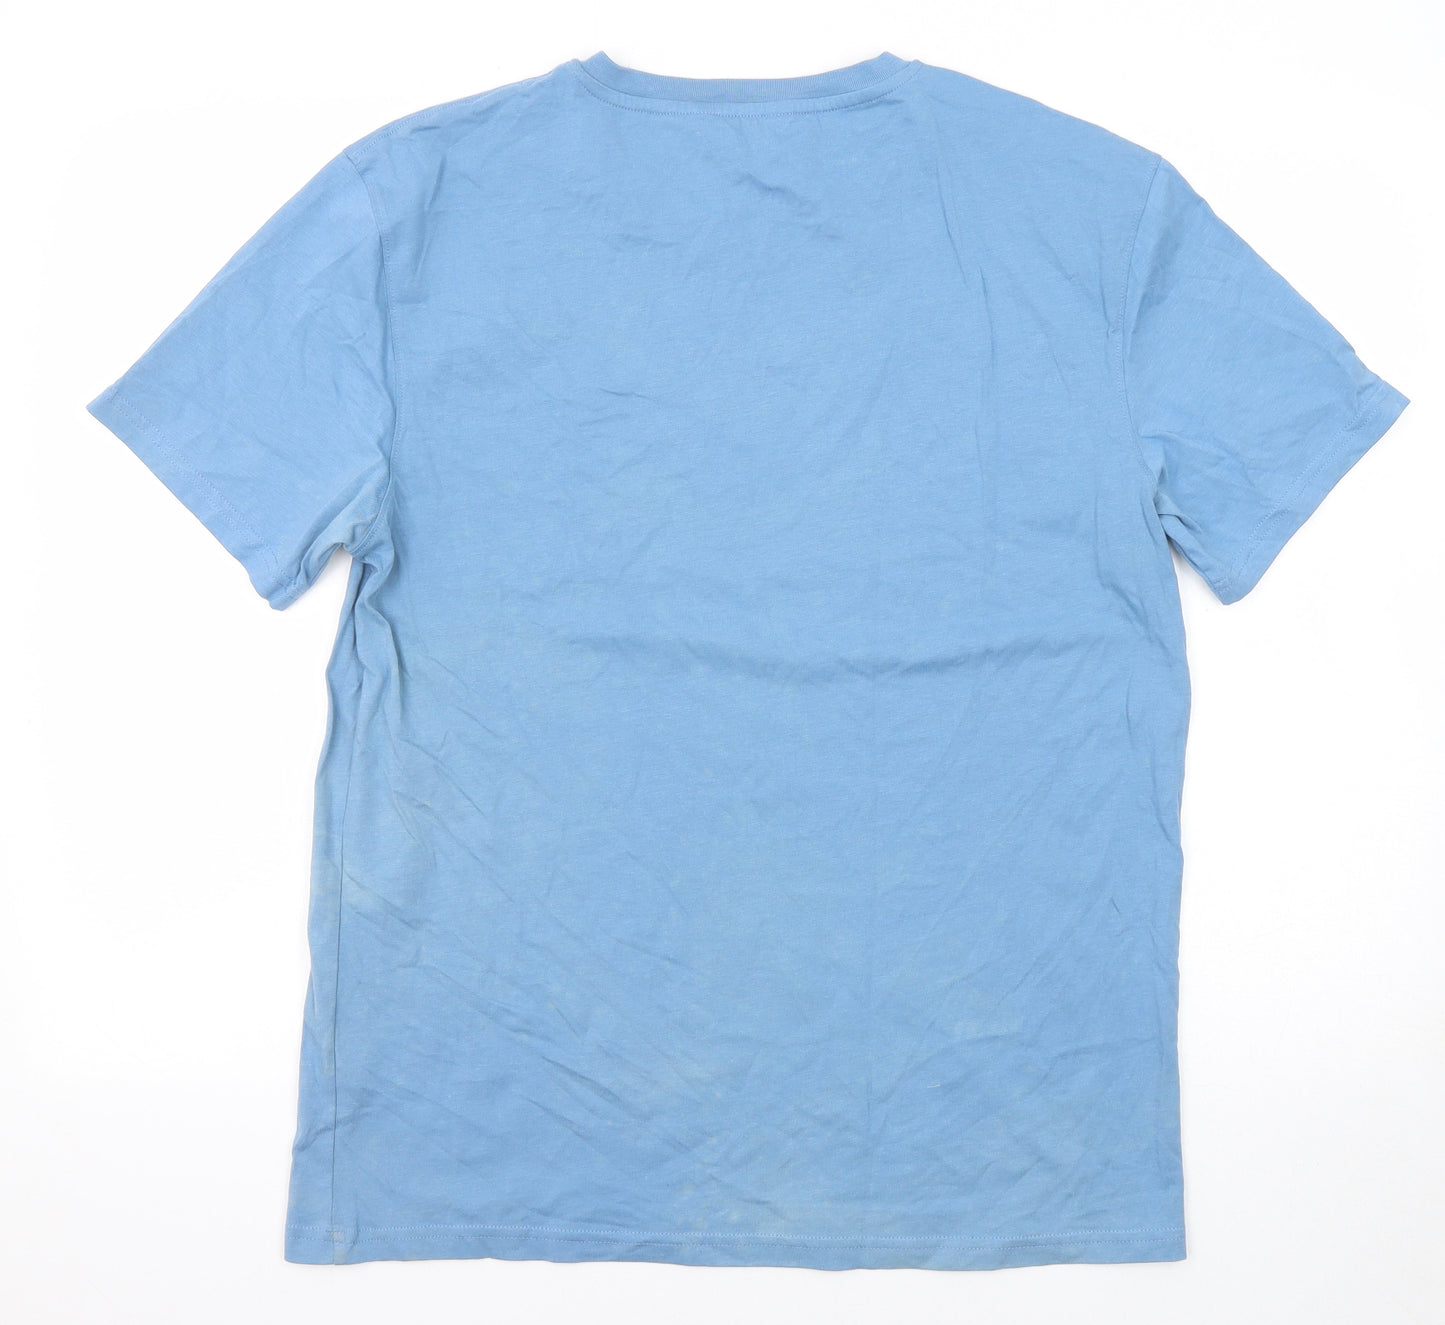 Marks and Spencer Mens Blue Cotton T-Shirt Size M V-Neck